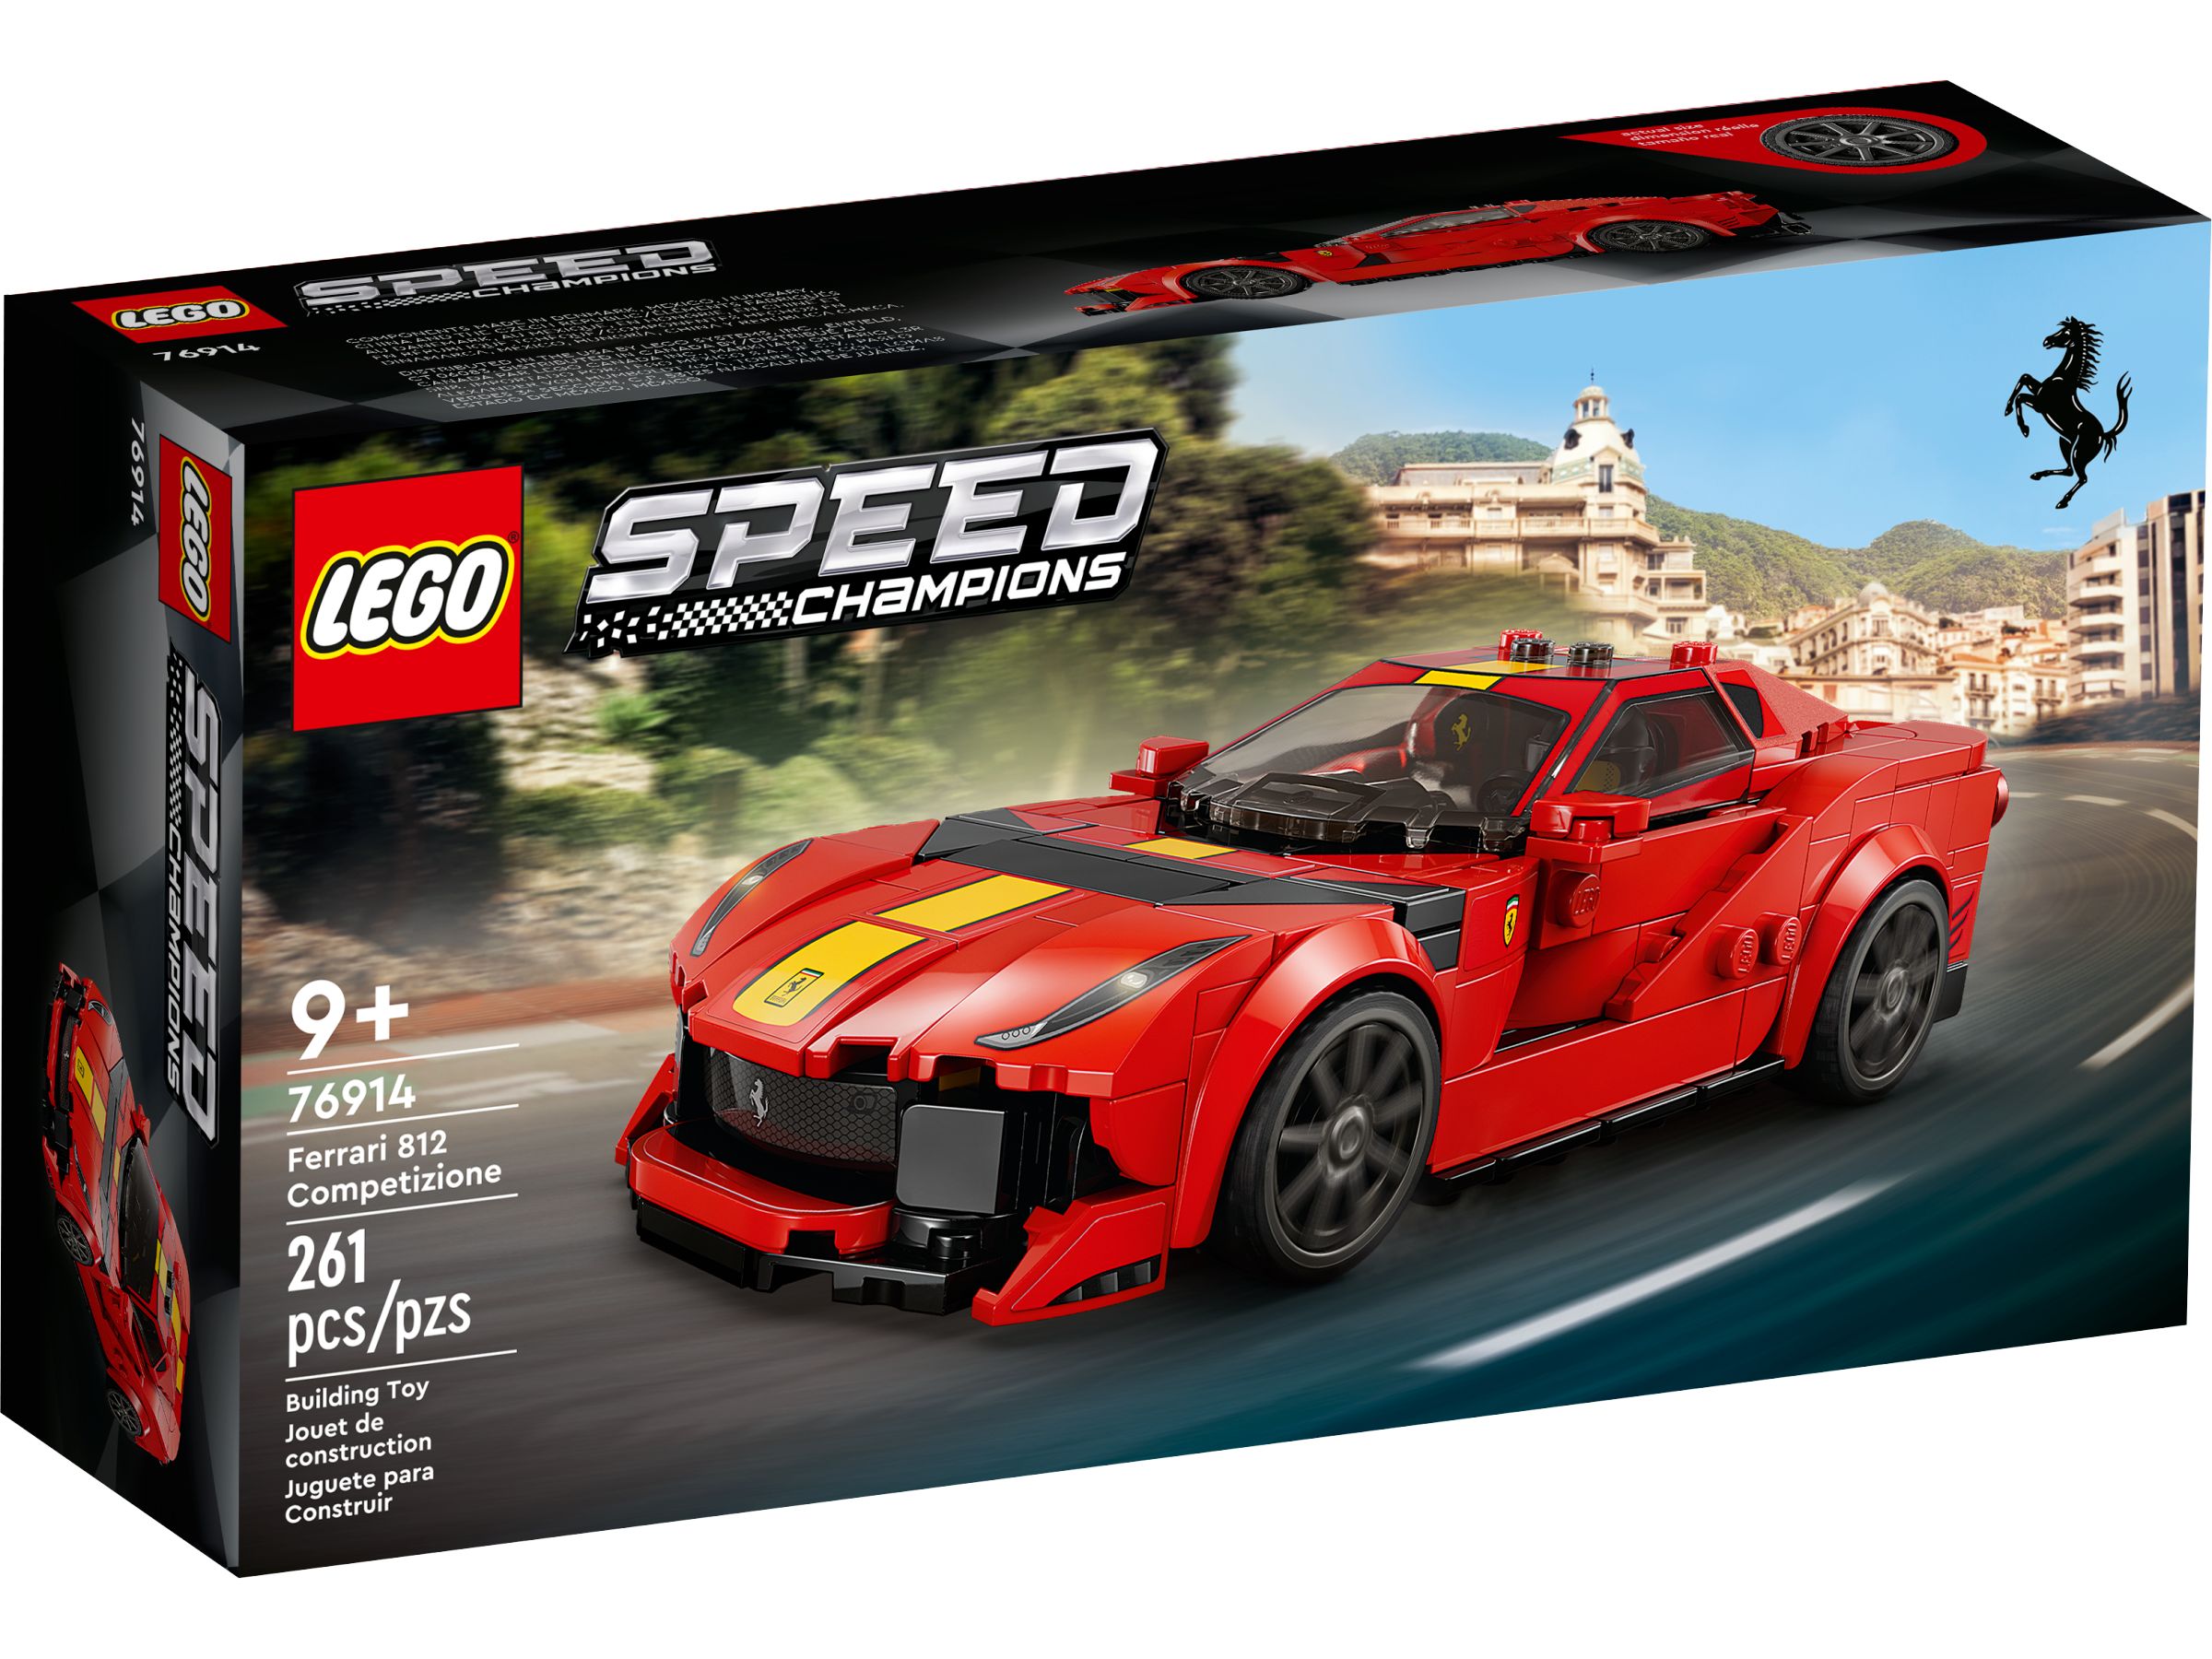 LEGO Speed Champions 76914 Ferrari 812 Competizione LEGO_76914_alt1.jpg